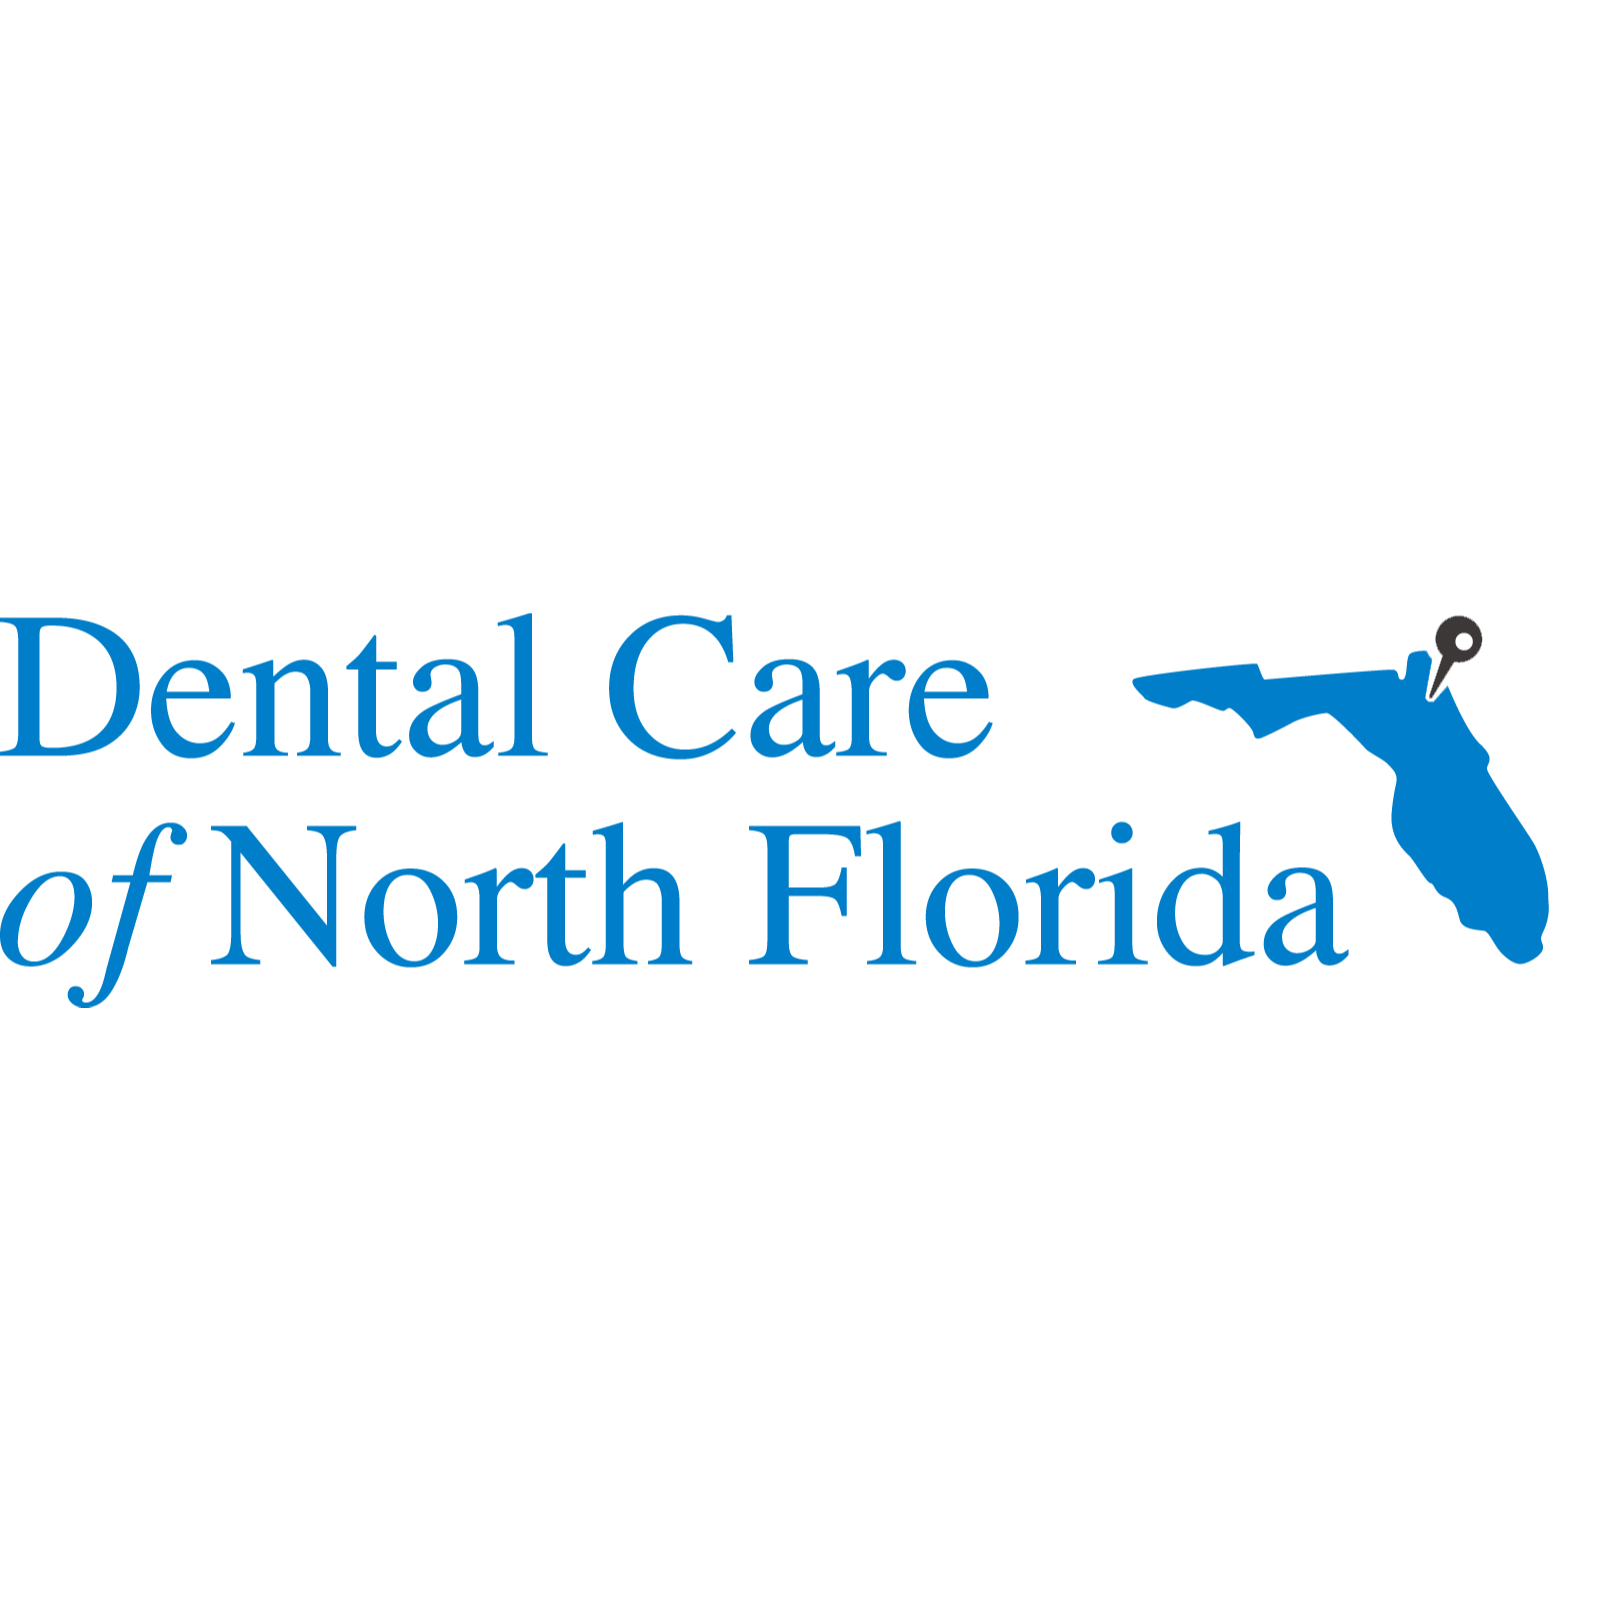 Dental Care of North Florida-Lem Turner-CLOSED